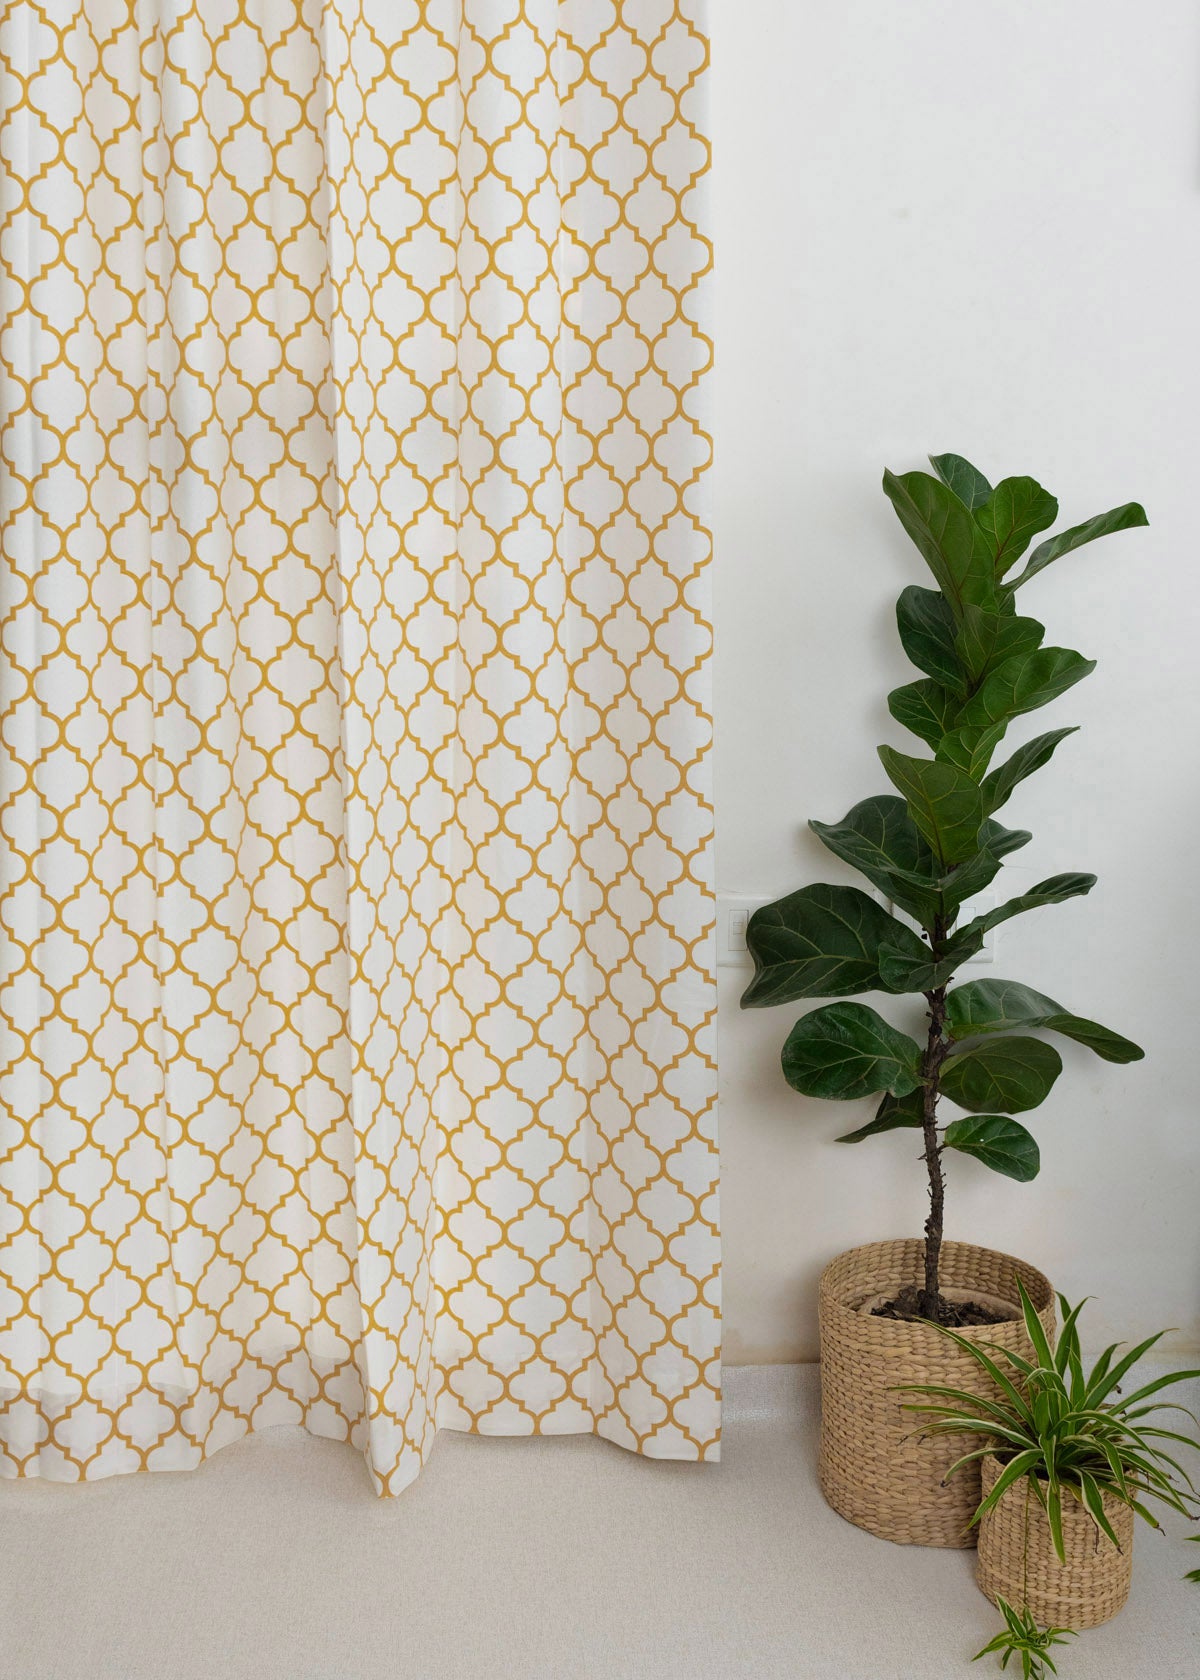 Trellis Printed 100% Customizable Cotton geometric curtain for bed room - Room darkening - Mustard